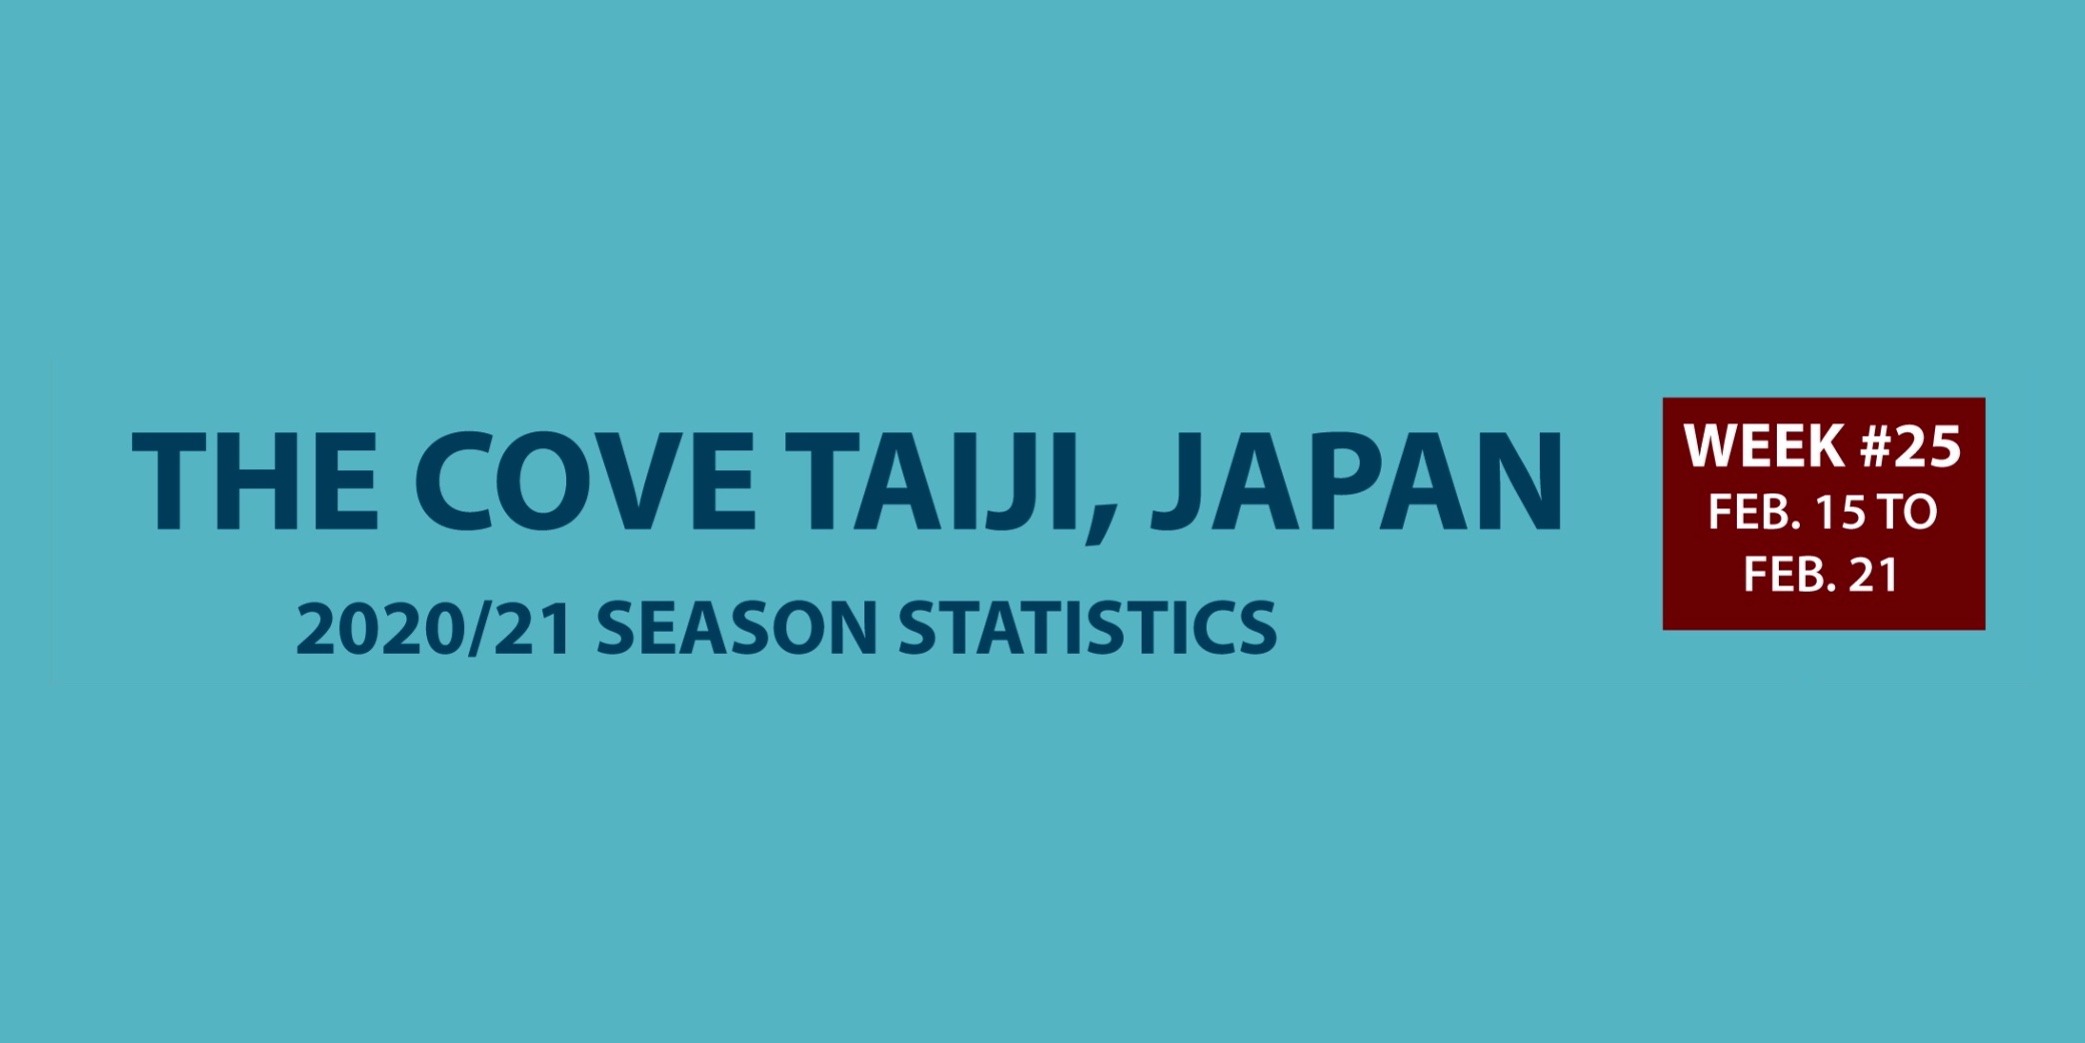 Chasse au dauphin à Taïji (Japon) – Bilan semaine du 15 au 21 février 2021 #25